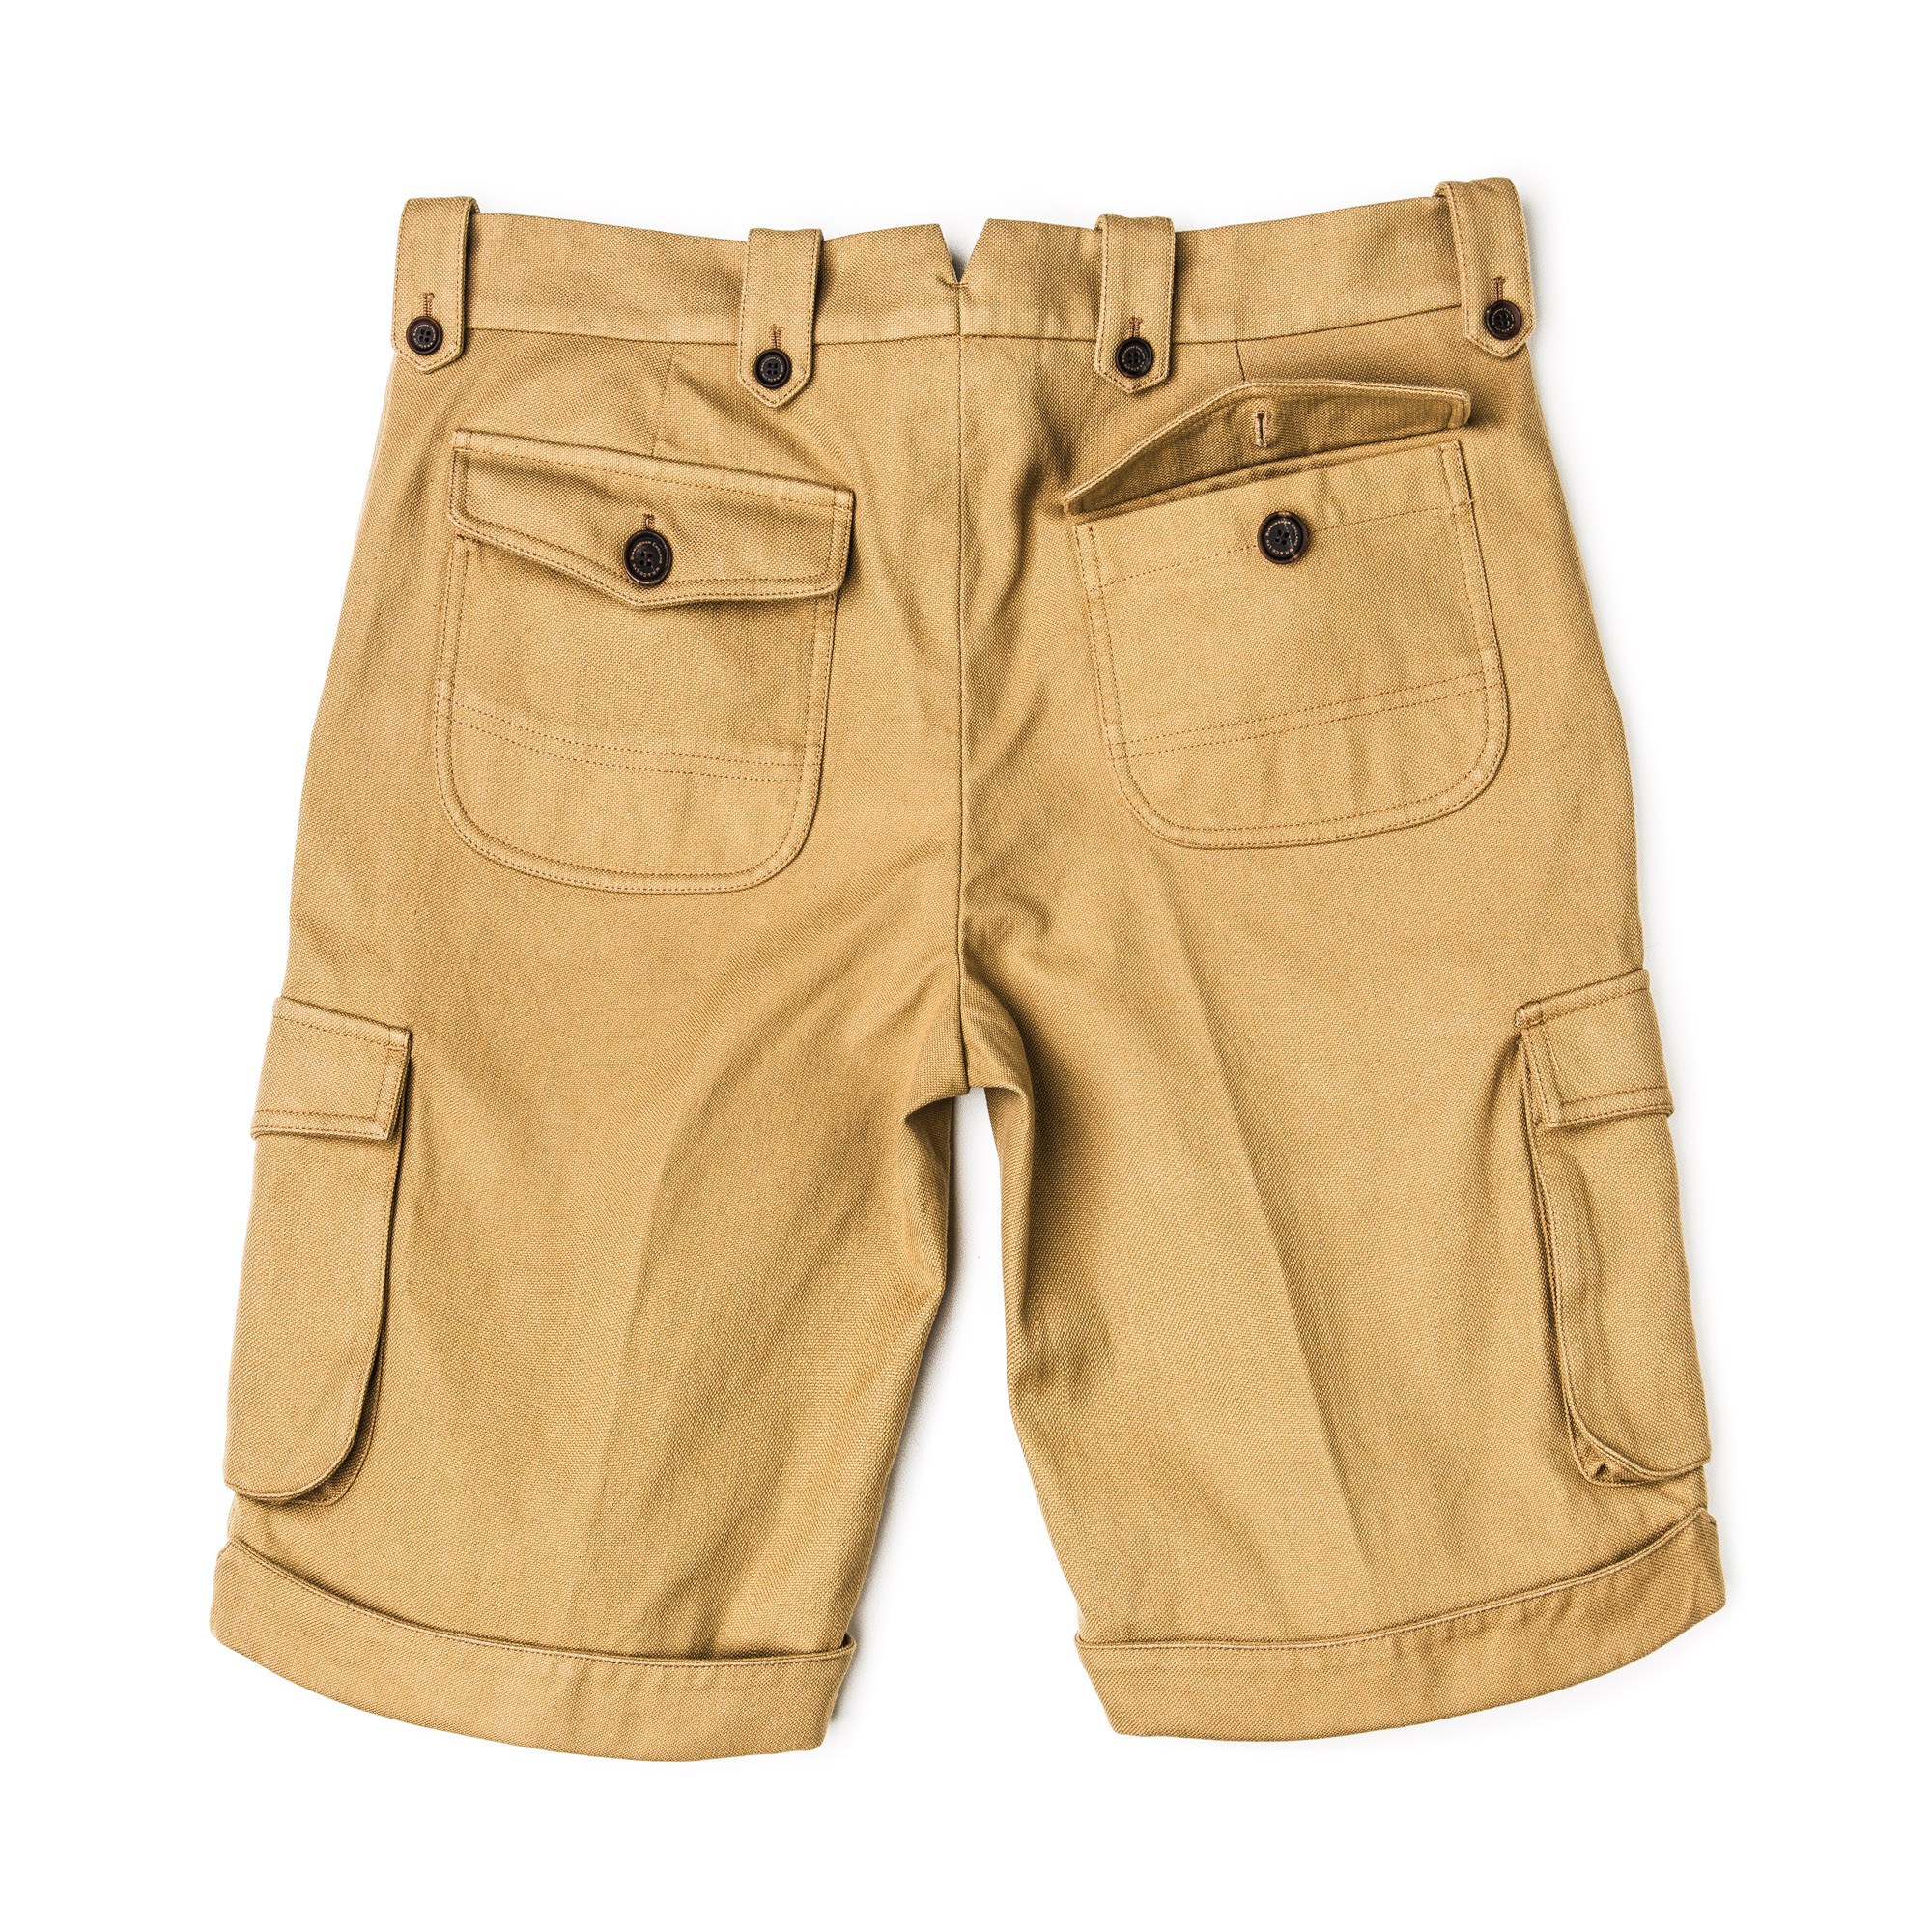 Westley Richards Safari Shorts